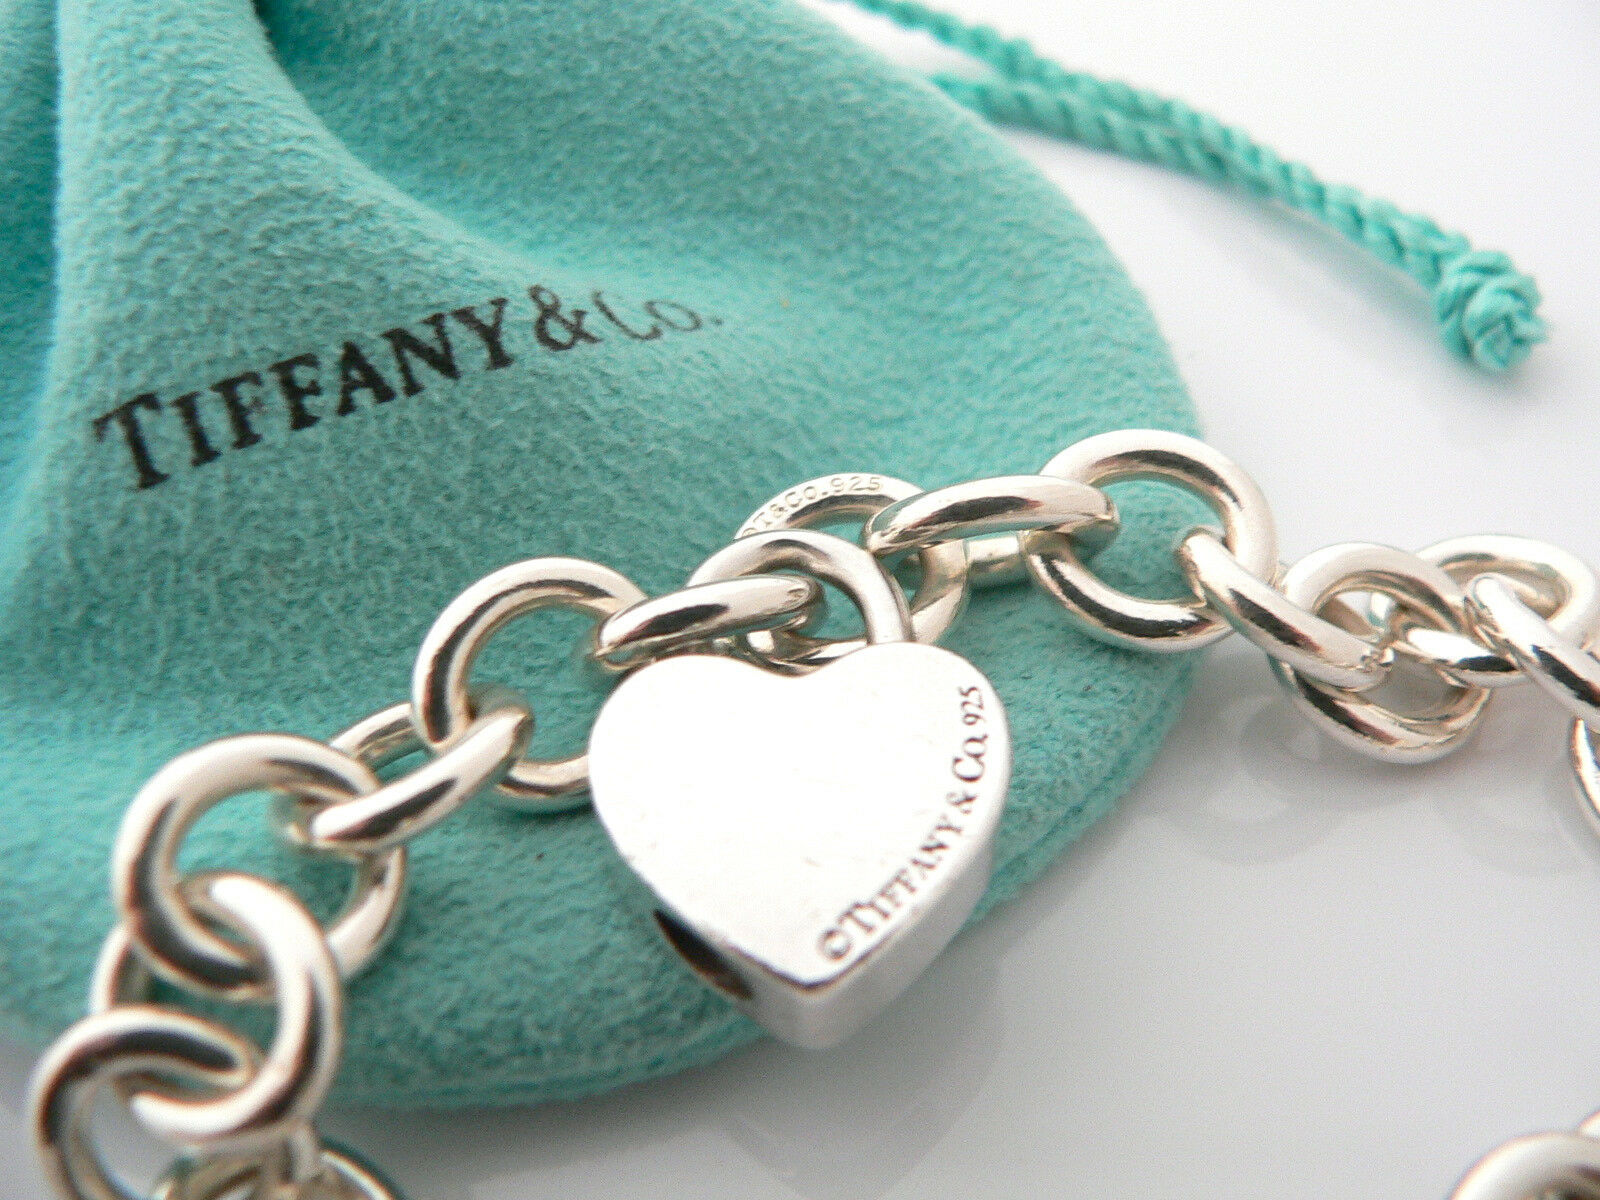 Home › Tiffany & Co Silver XOXO Heart Padlock Bracelet Bangle Charm ...